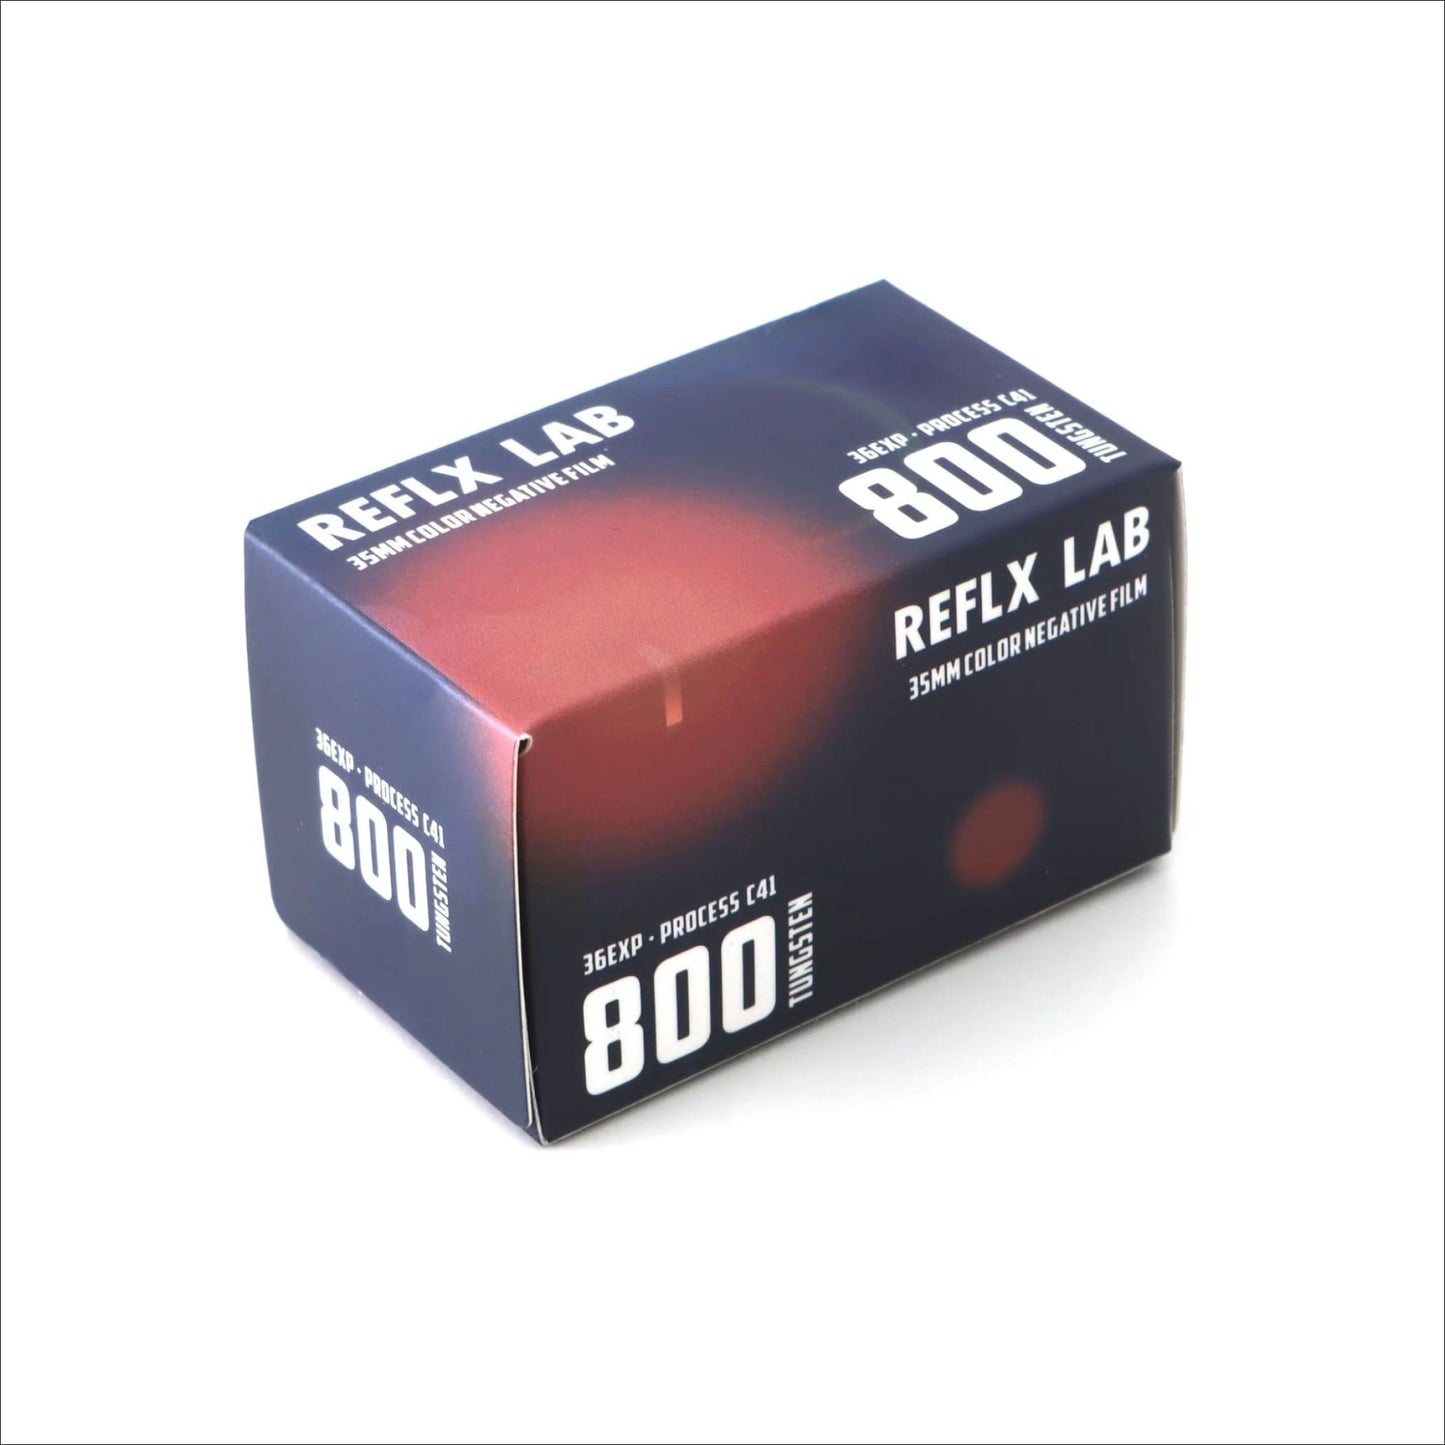 Reflx Lab 800 Color C41 35mm 36 Exp Film Kodak